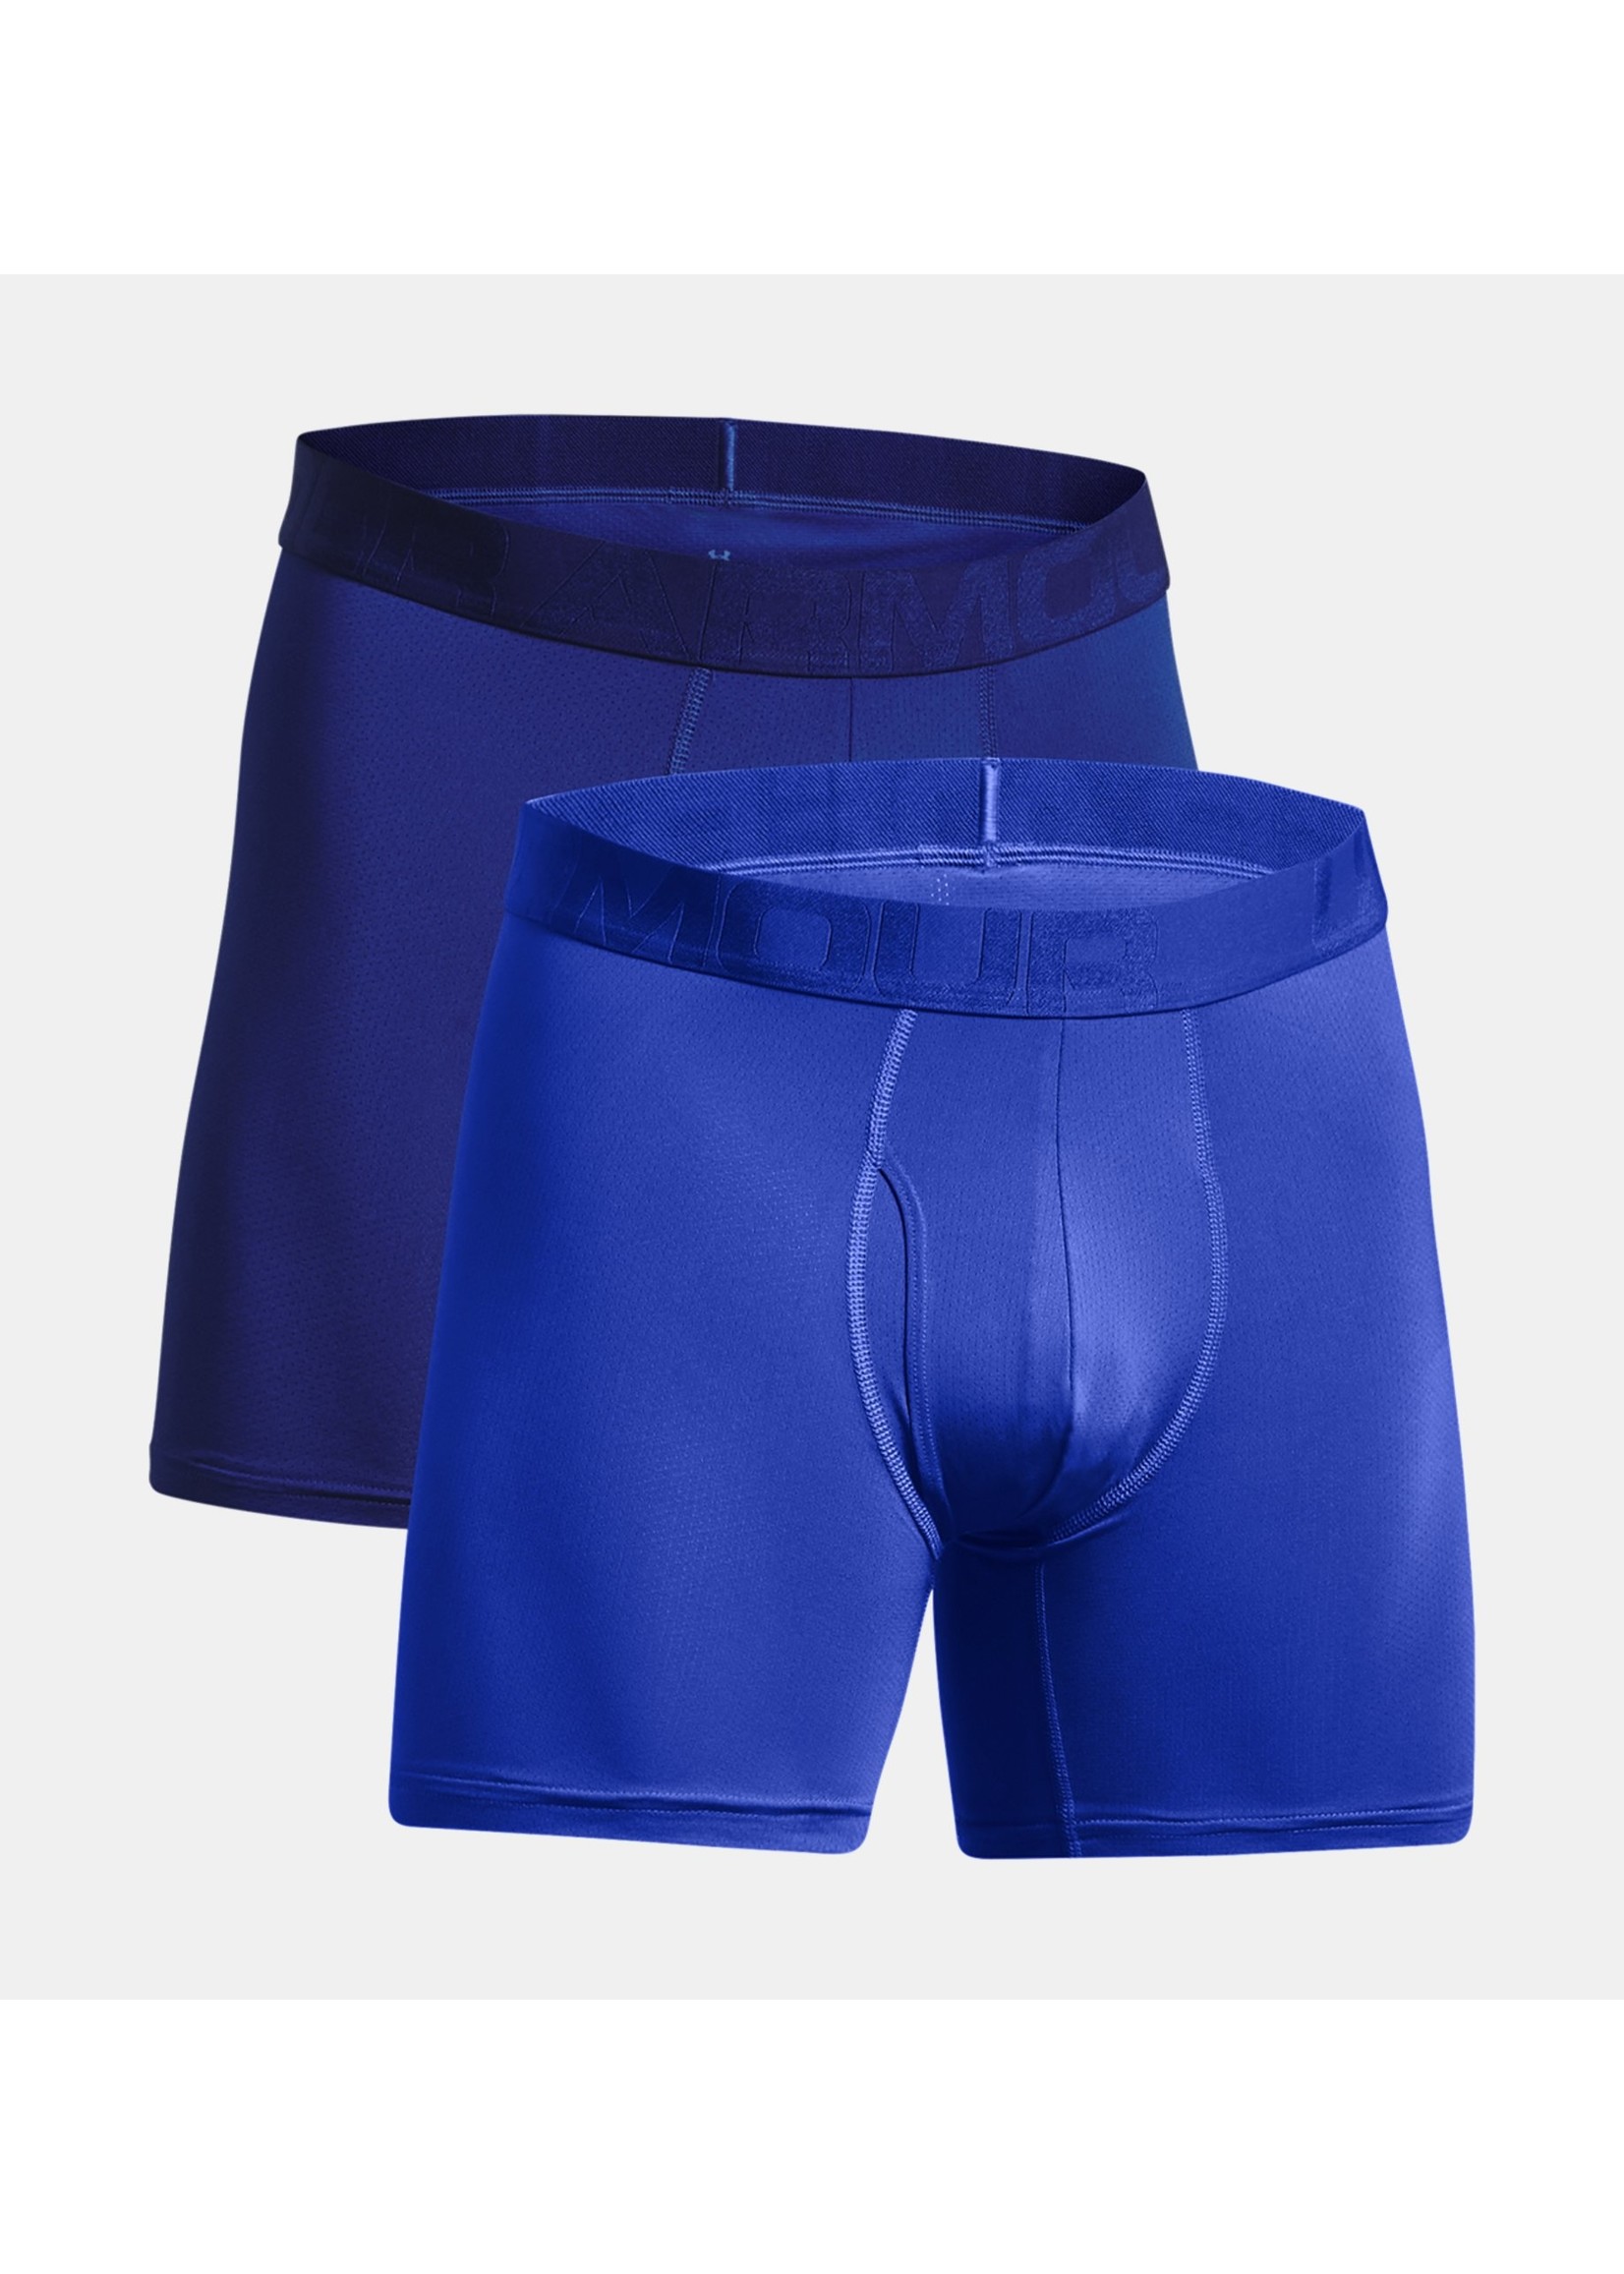 Underwear, Boxerjock® & UA Tech